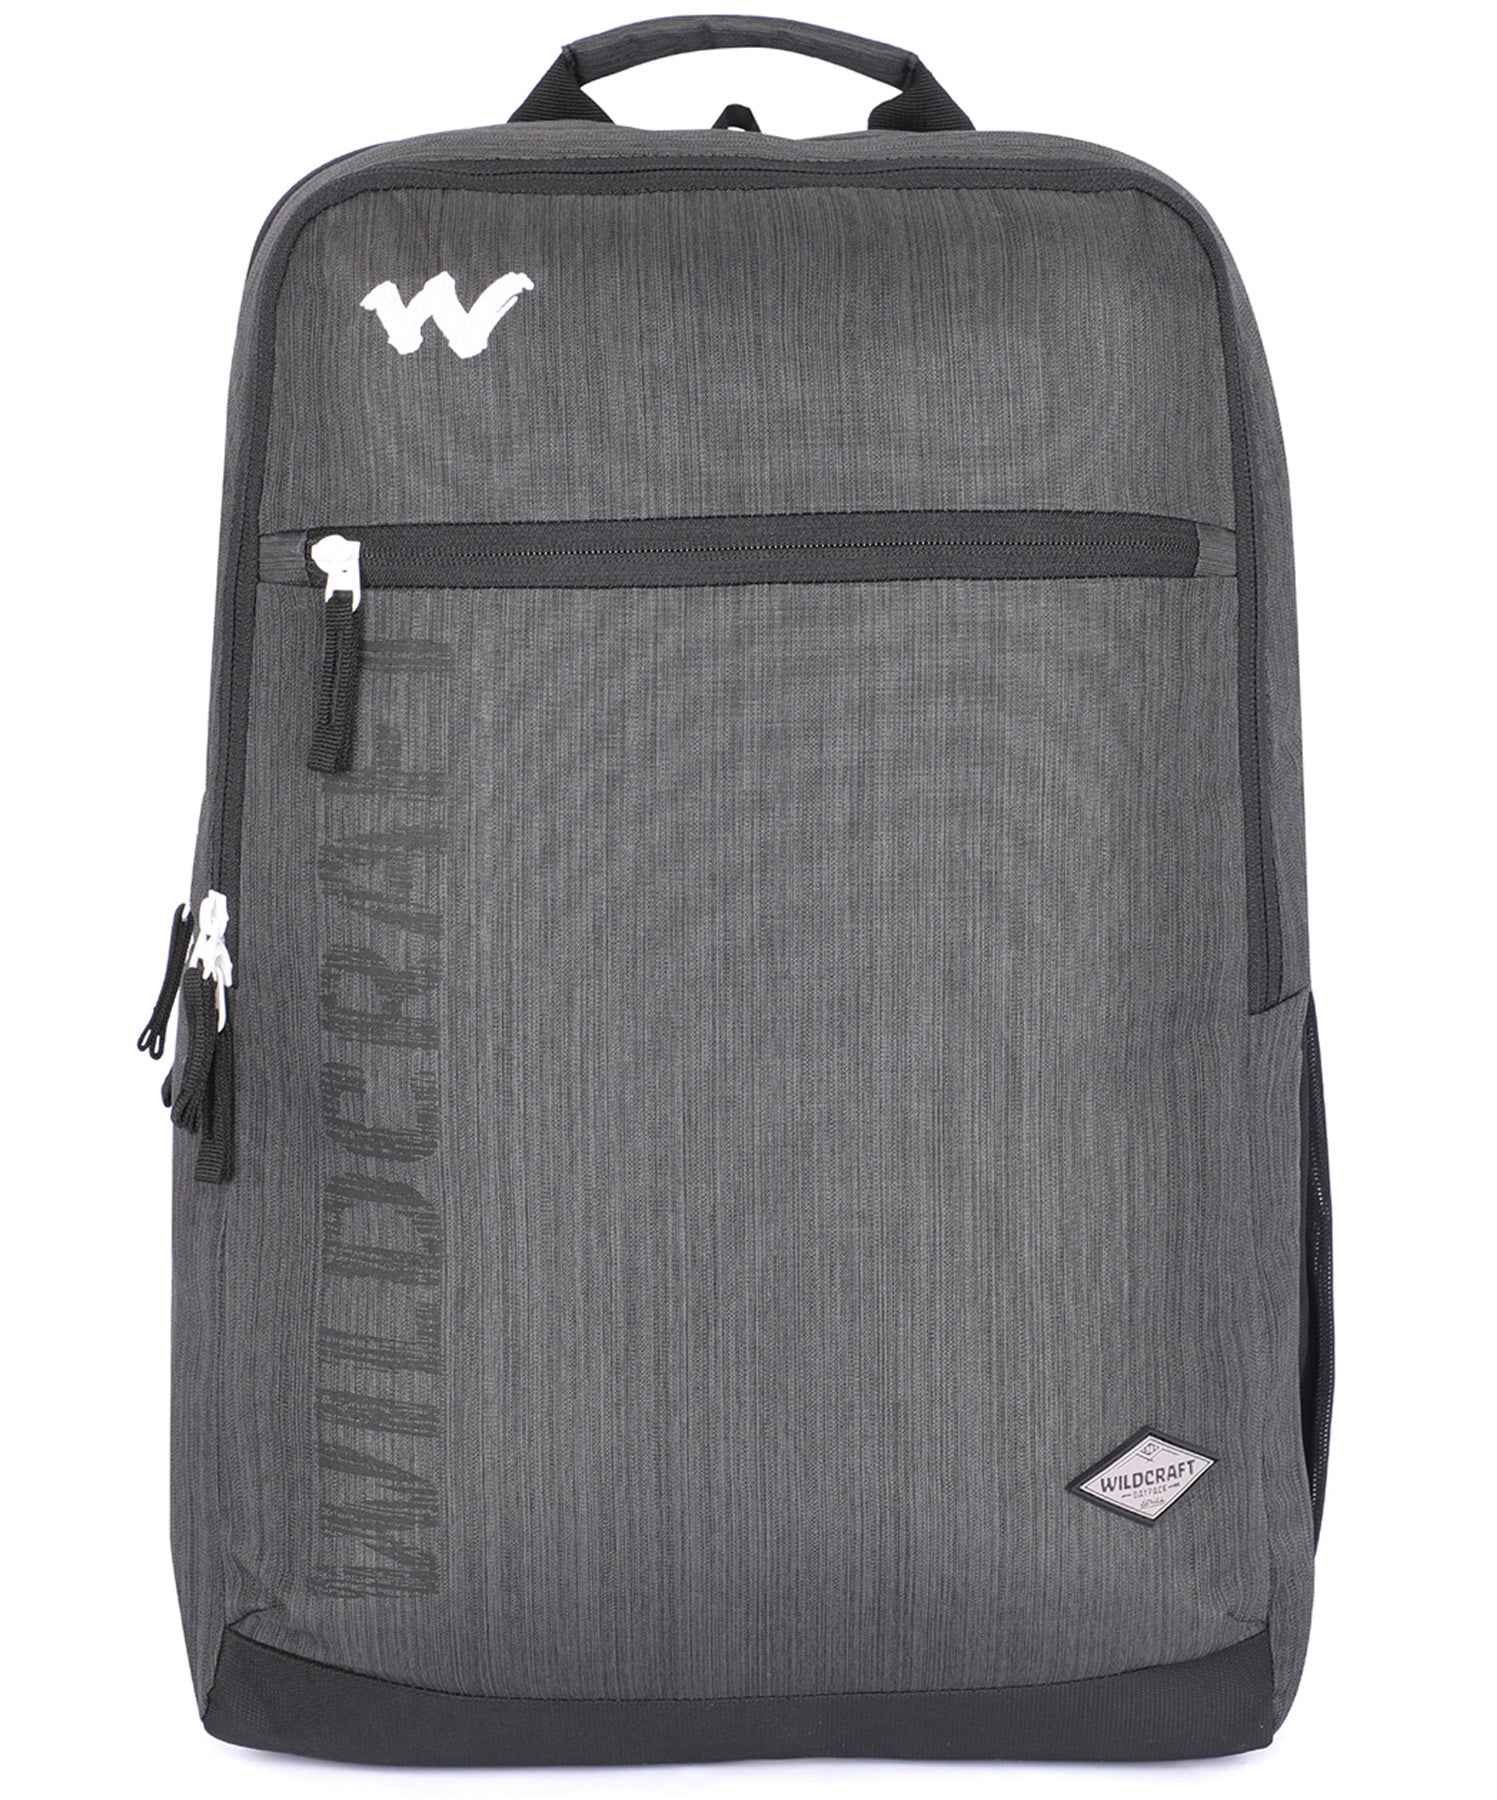 Wildcraft Evo 1 Mel Black Backpack, EVO 1 MEL BK